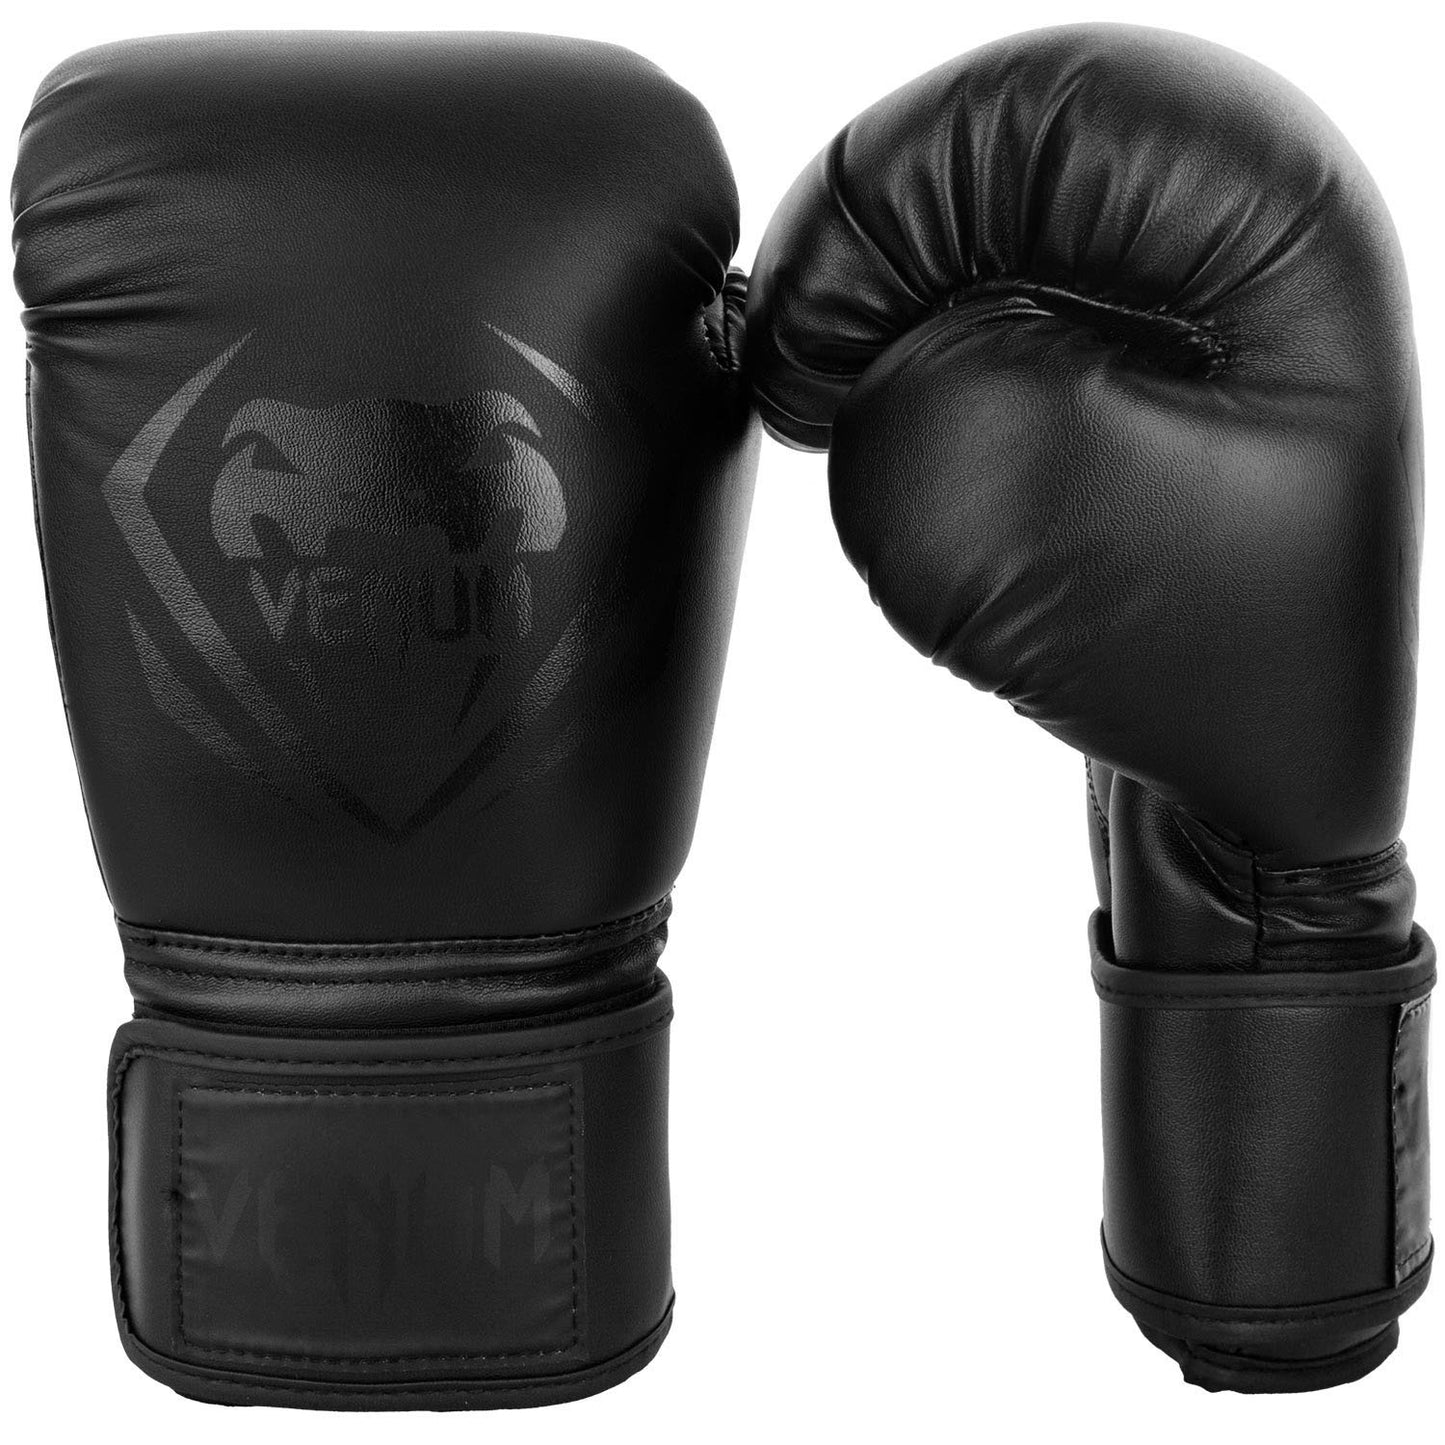 Venum Contender Boxing Gloves,16 Oz - Best Price online Prokicksports.com